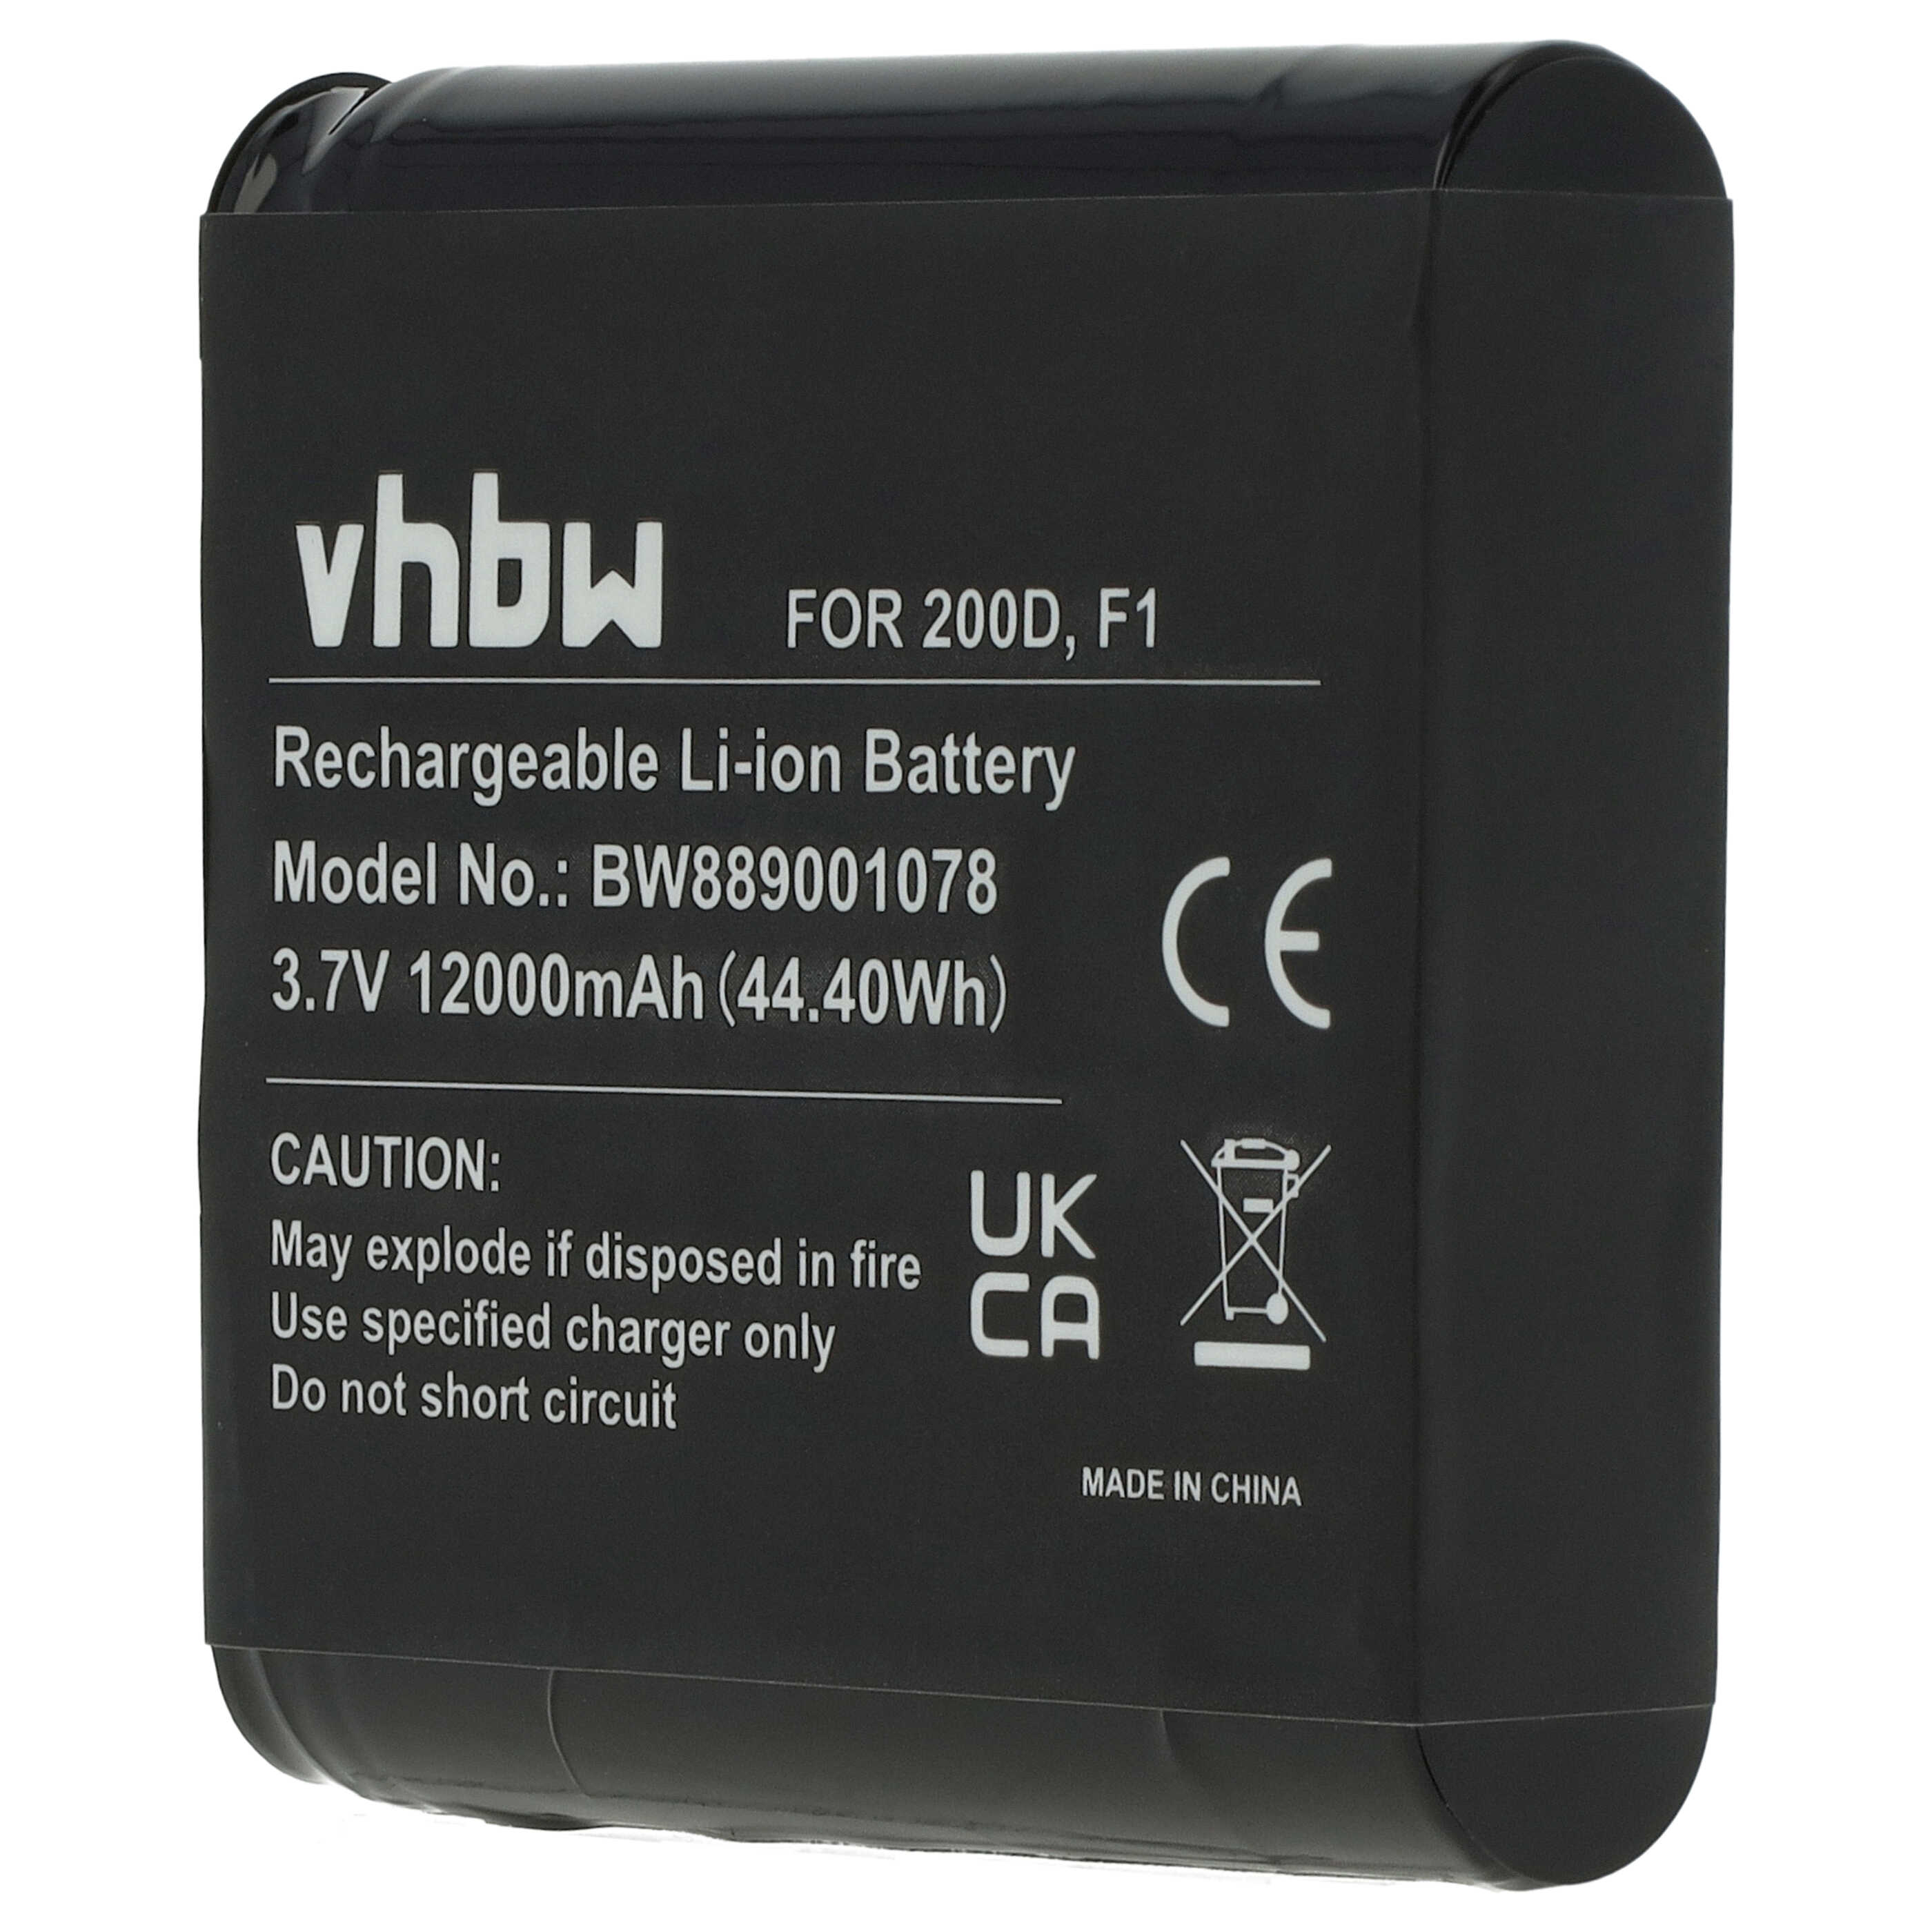 DAB Radio Battery Replacement for Pure ChargePAK F1, F1 - 12000mAh 3.7V Li-Ion